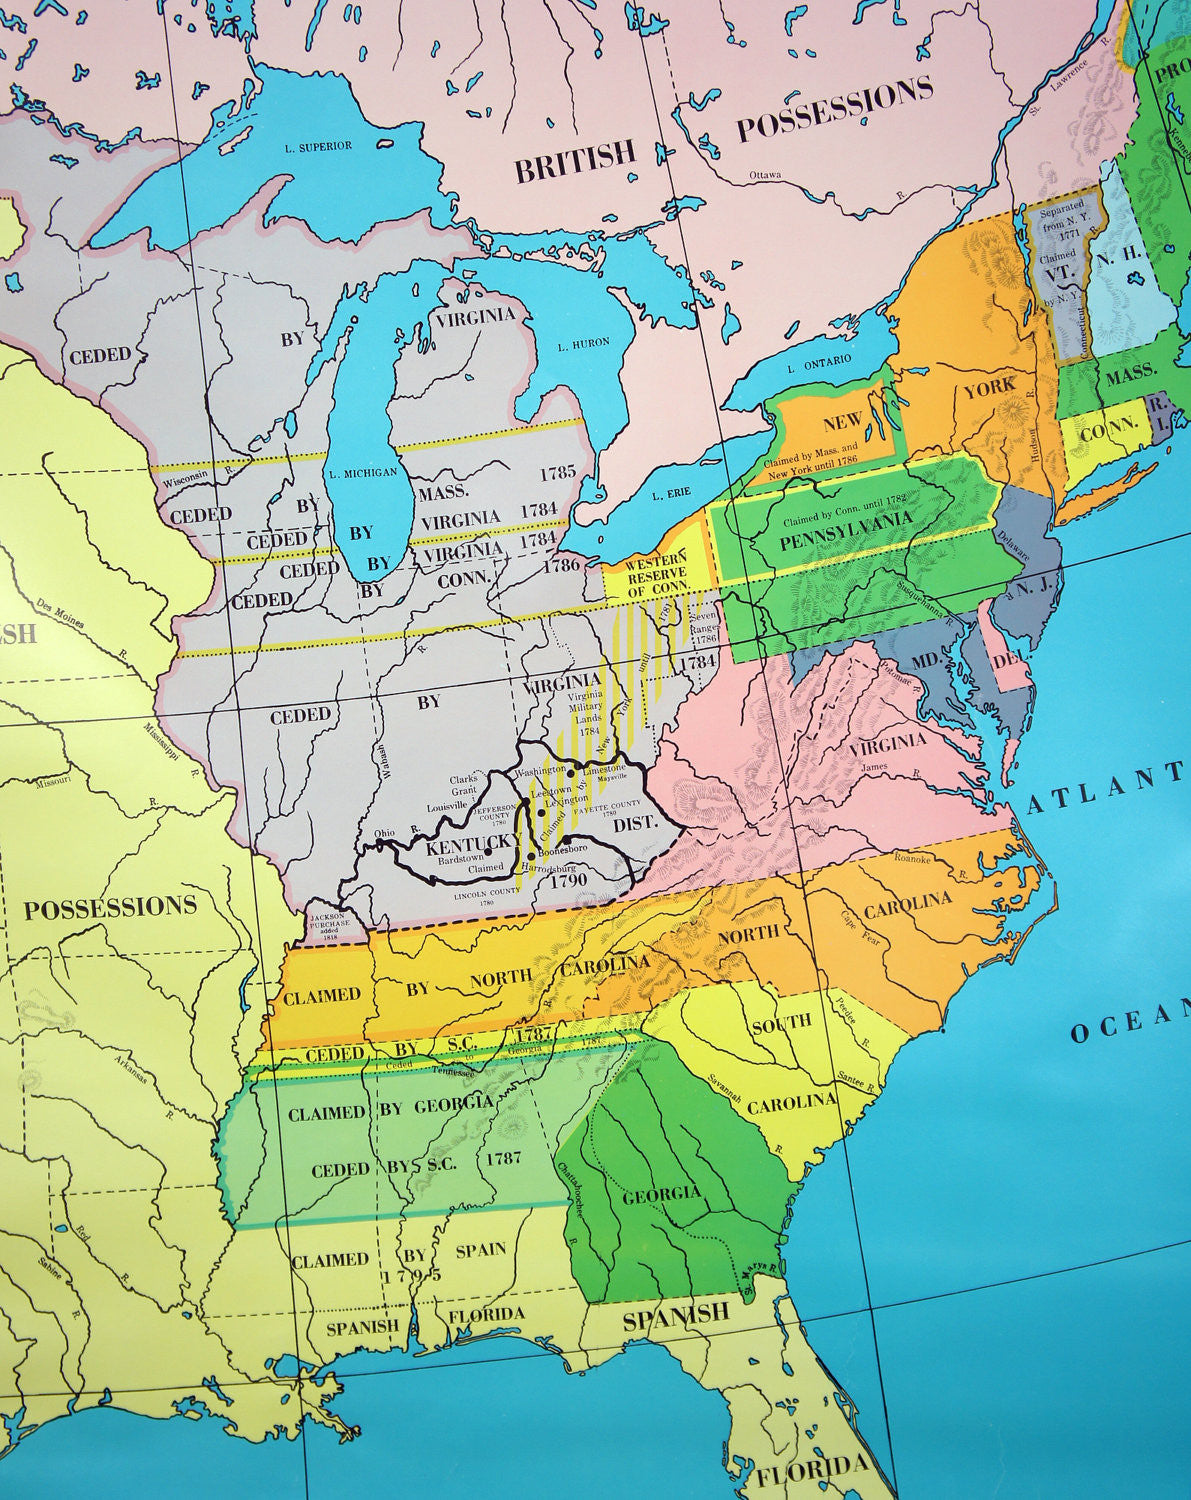 U.S. History Wall Map - Land Claims & Ordinance of 1787